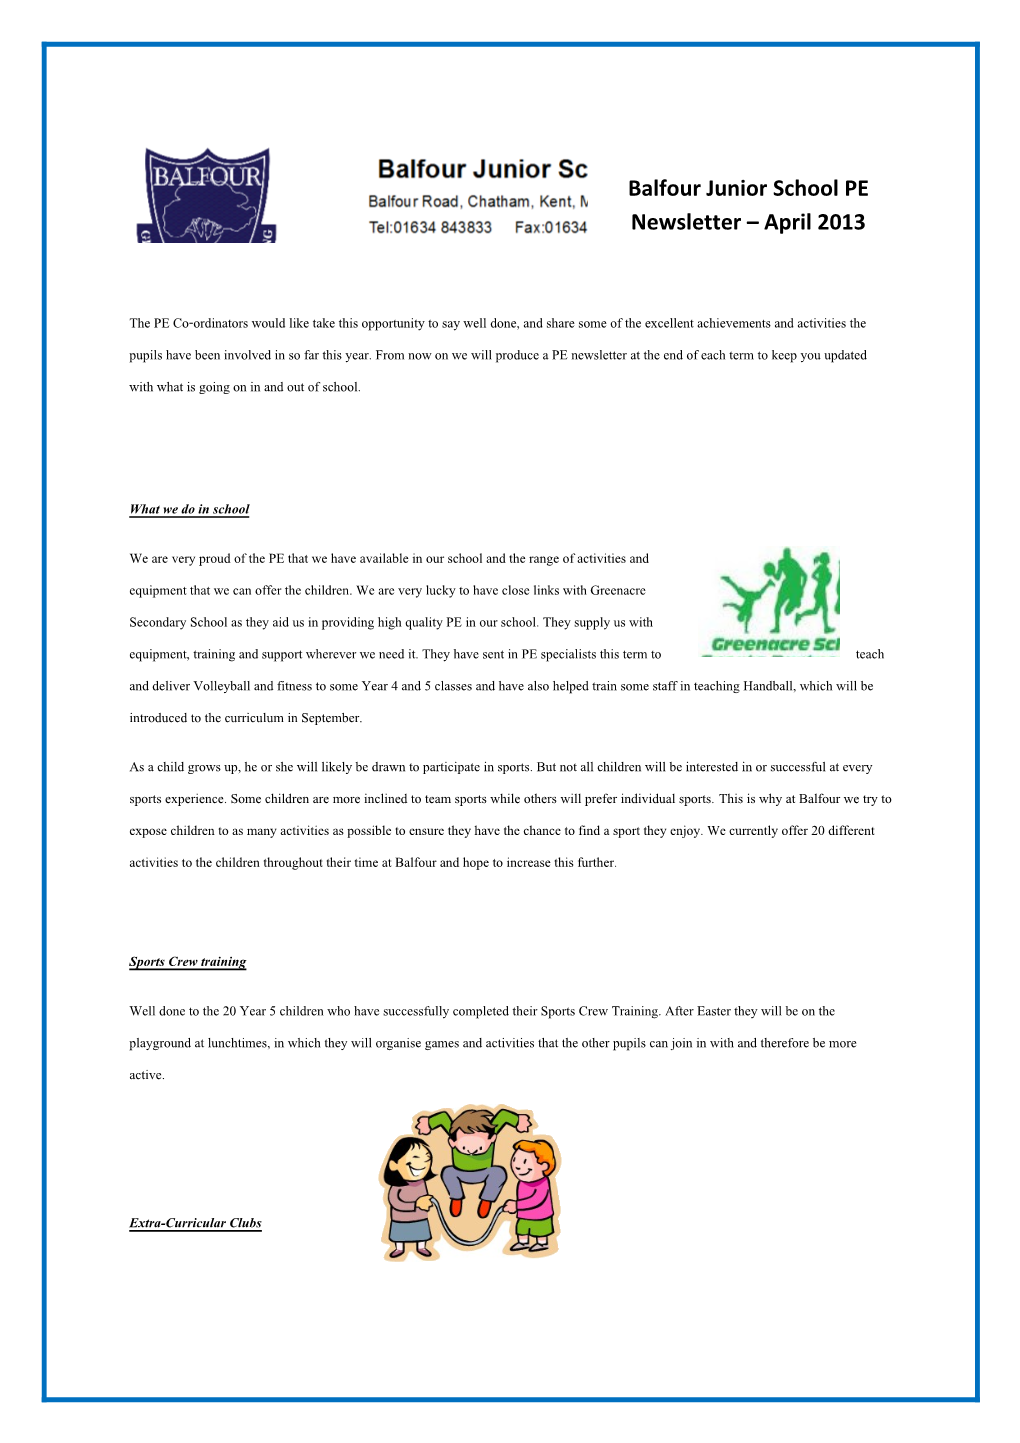 Balfour Junior School PE Newsletter April 2013